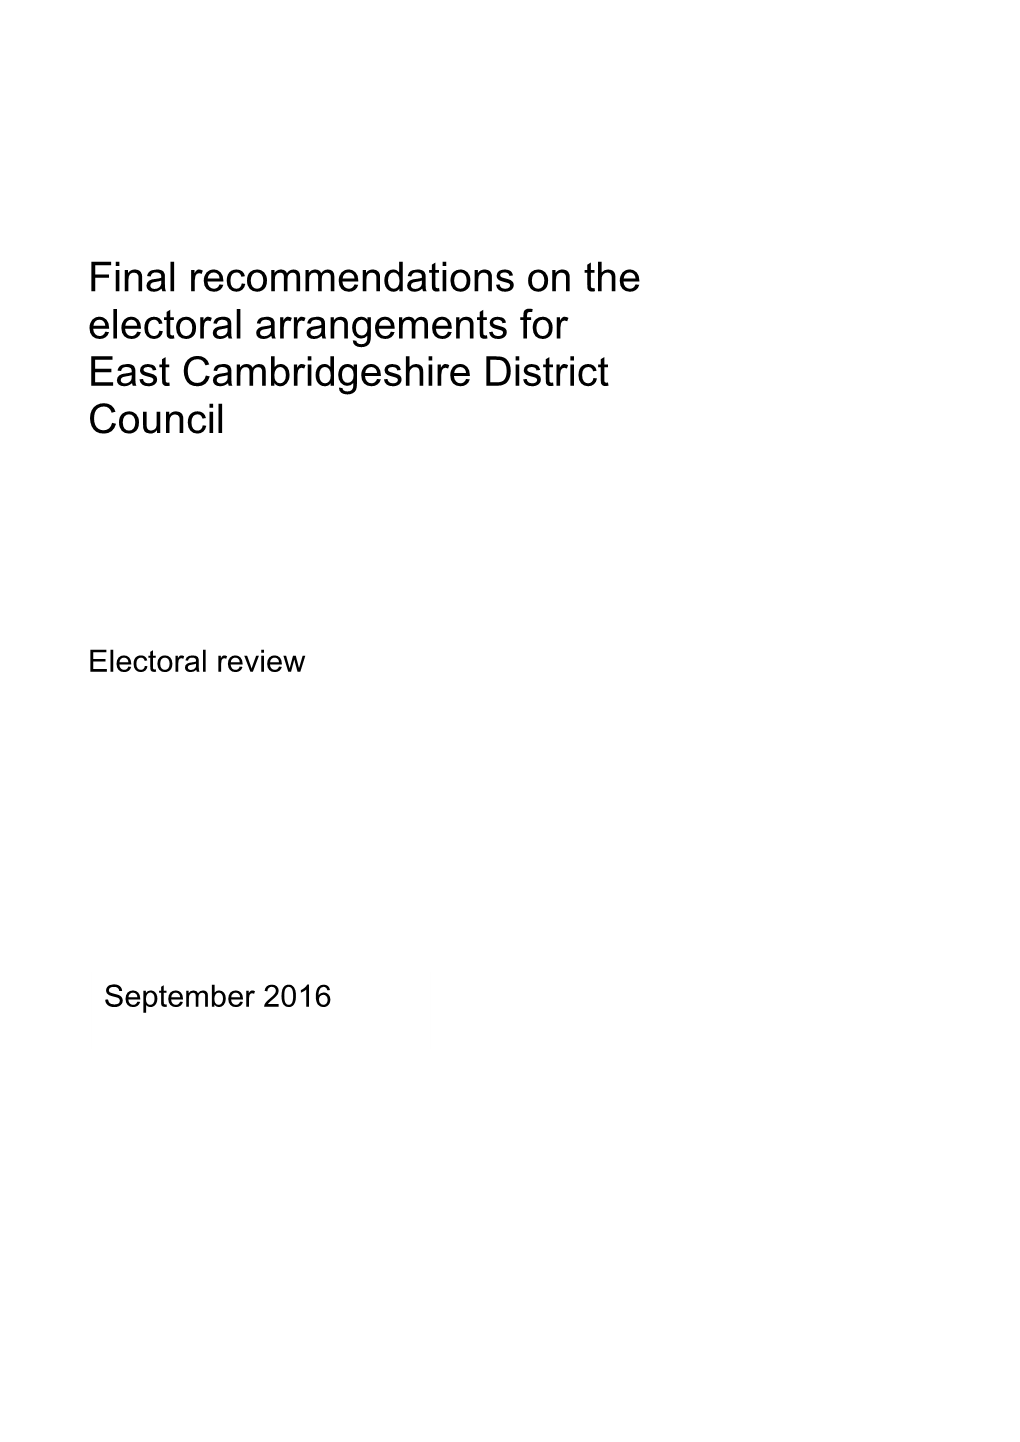 Final Recommendations on the Electoral Arrangements for East Cambridgeshire District Council